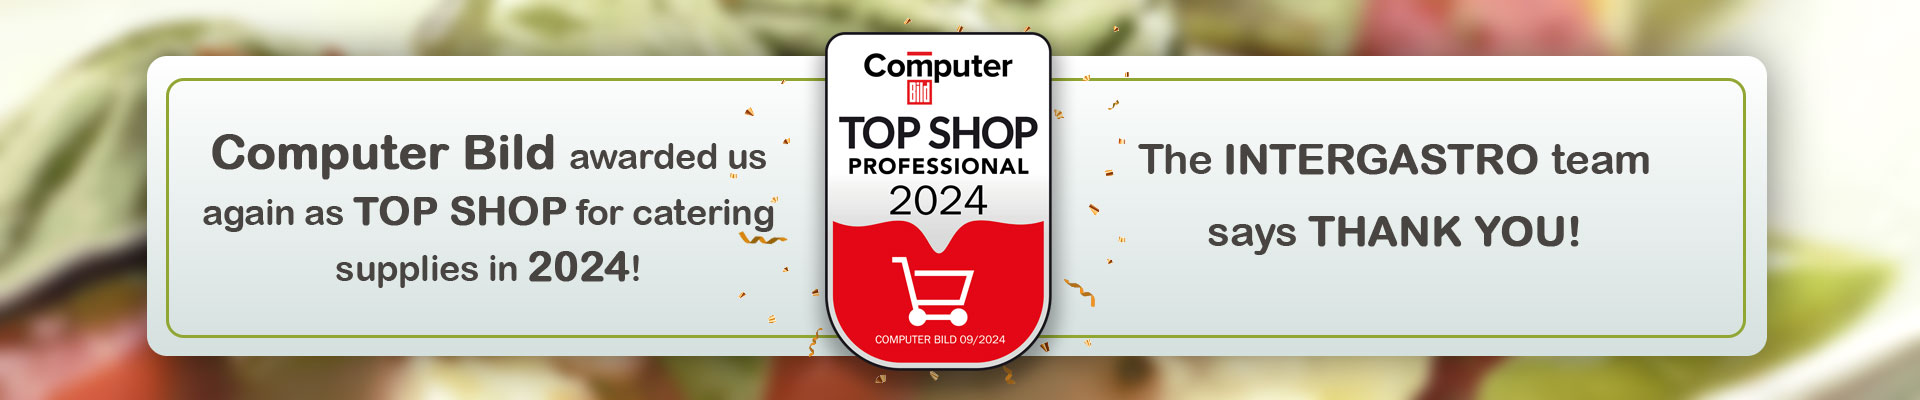 Computer Bild Award: Top Shop 2024